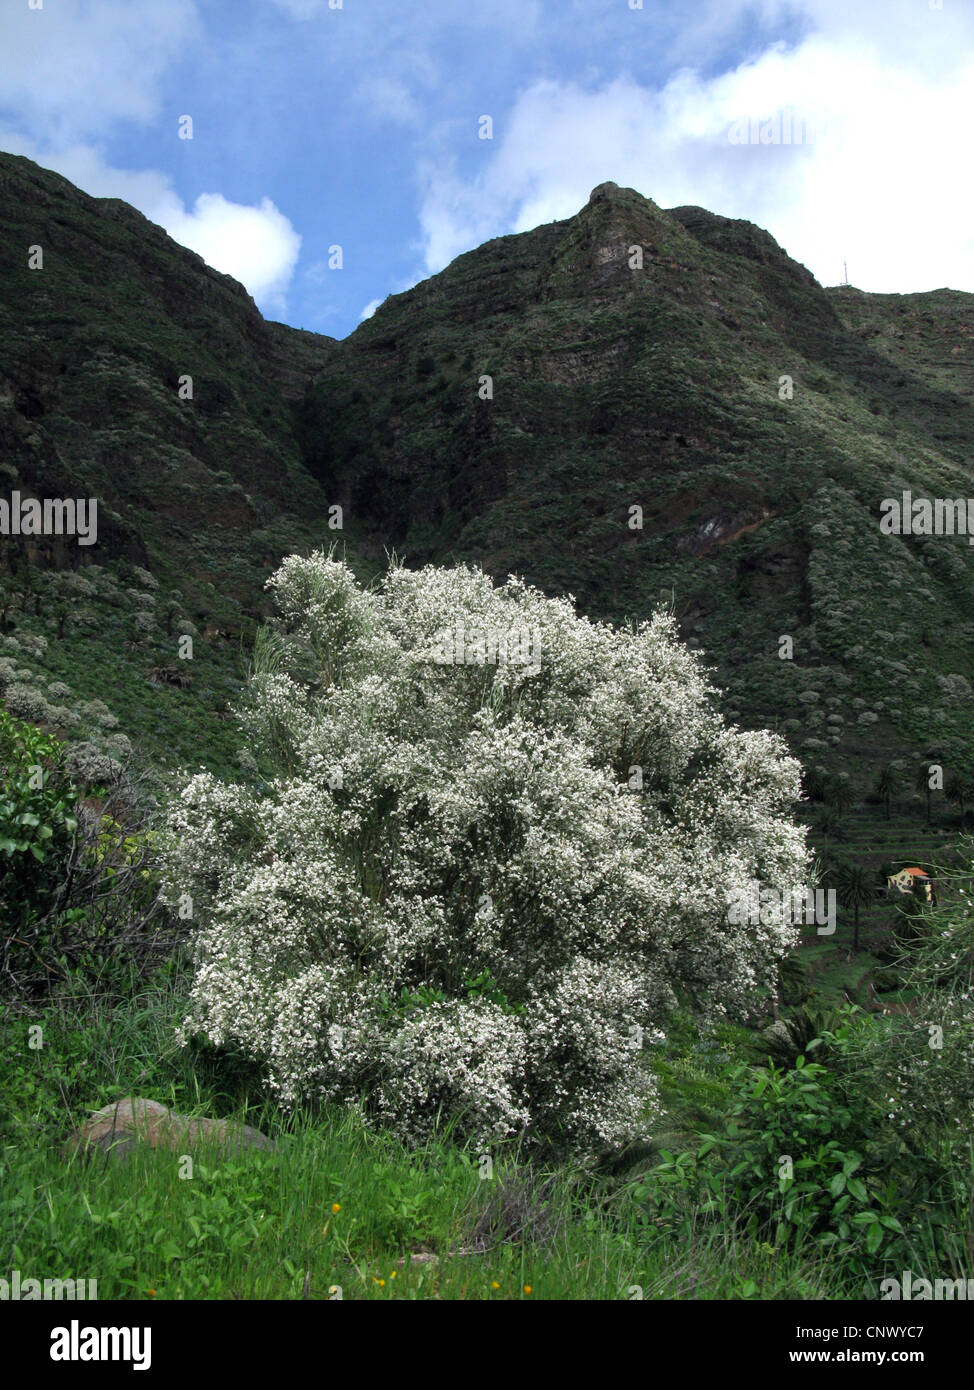 White Broom, Bridal Broom, White weeping broom  (Retama raetam), blooming shrub, Canary Islands, Gomera Stock Photo